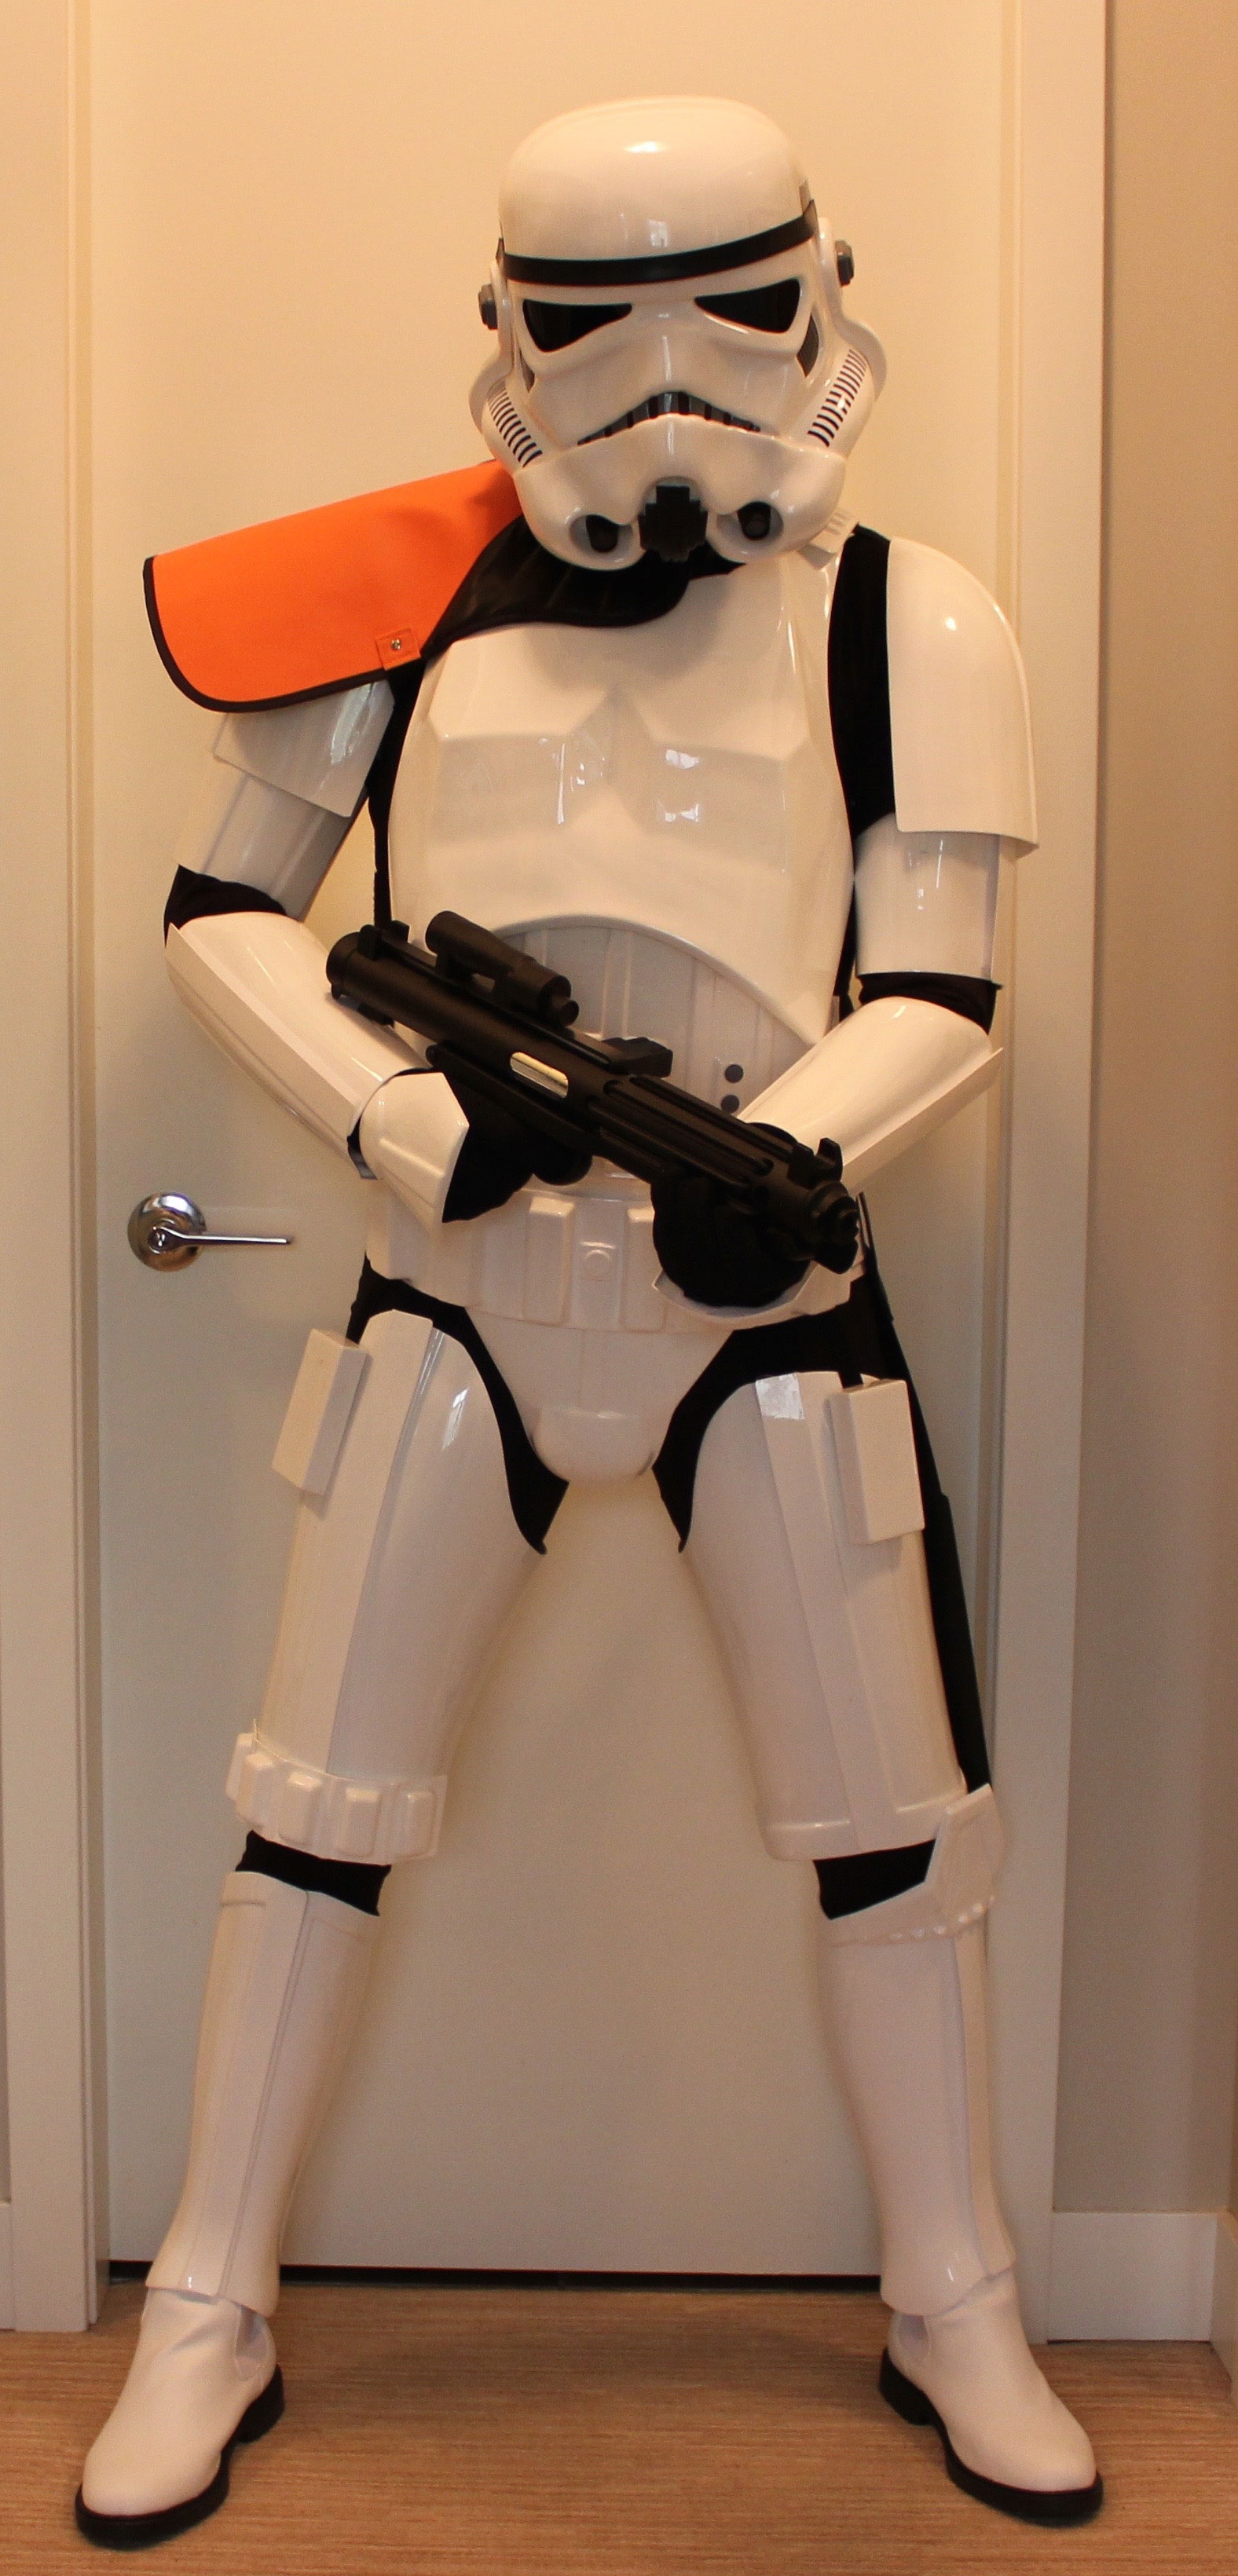 Sylvain replica stormtrooper ready to wear costume review jedirobeamerica